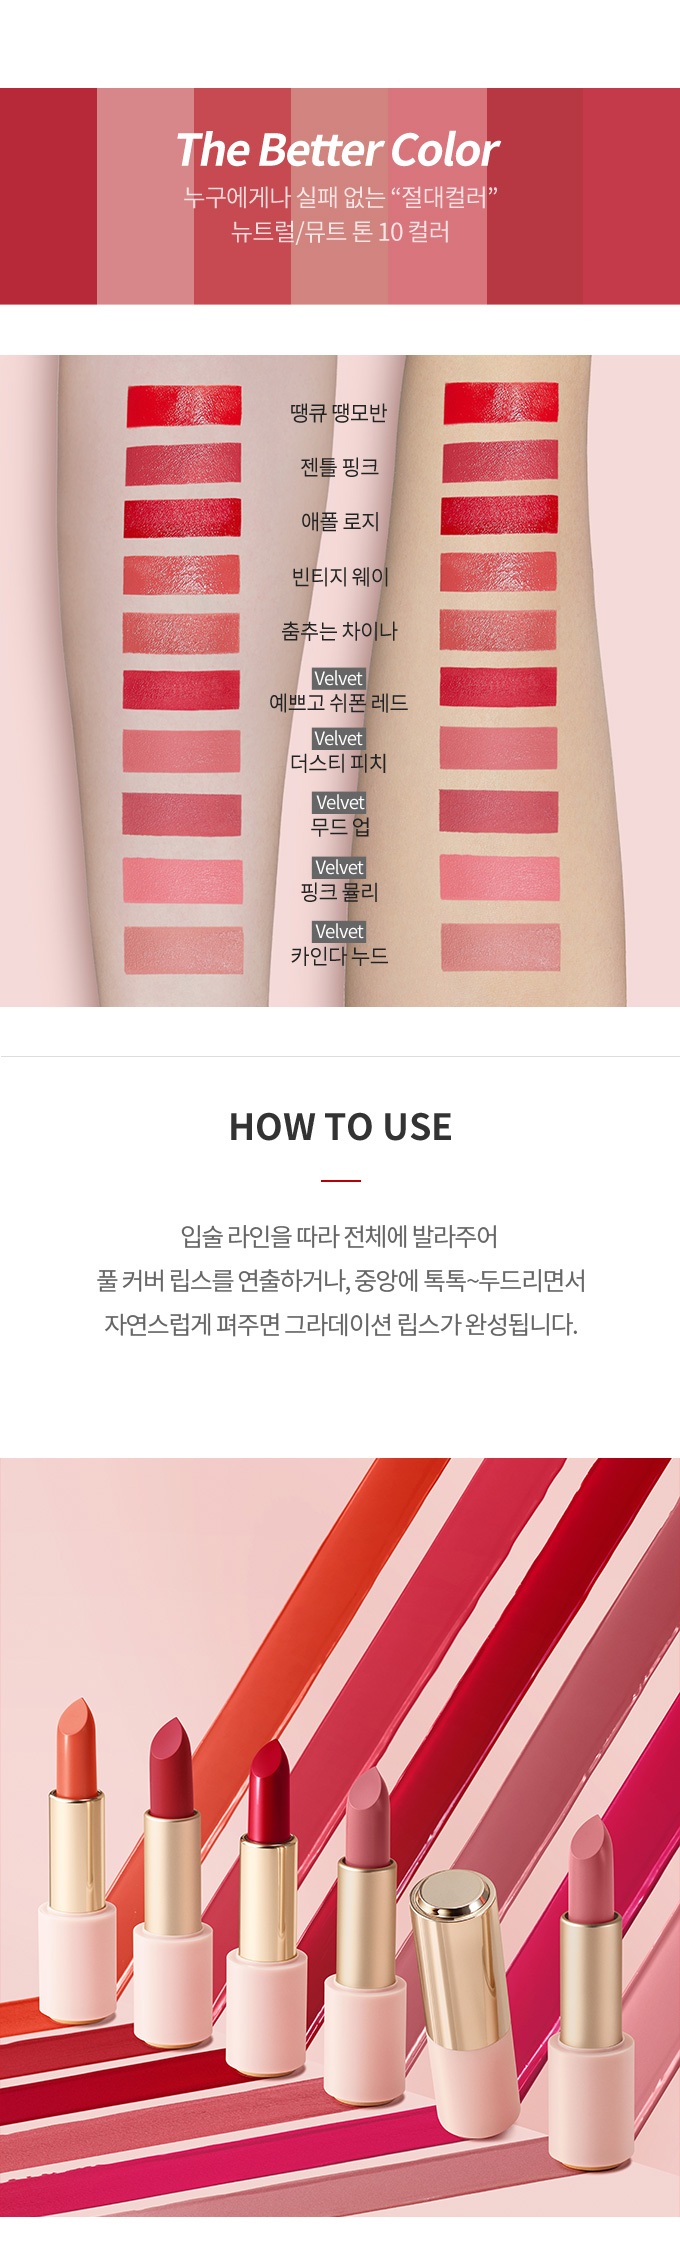 Etude House Better Lips Talk Velvet korean skincare product online shop malaysia China taiwan4